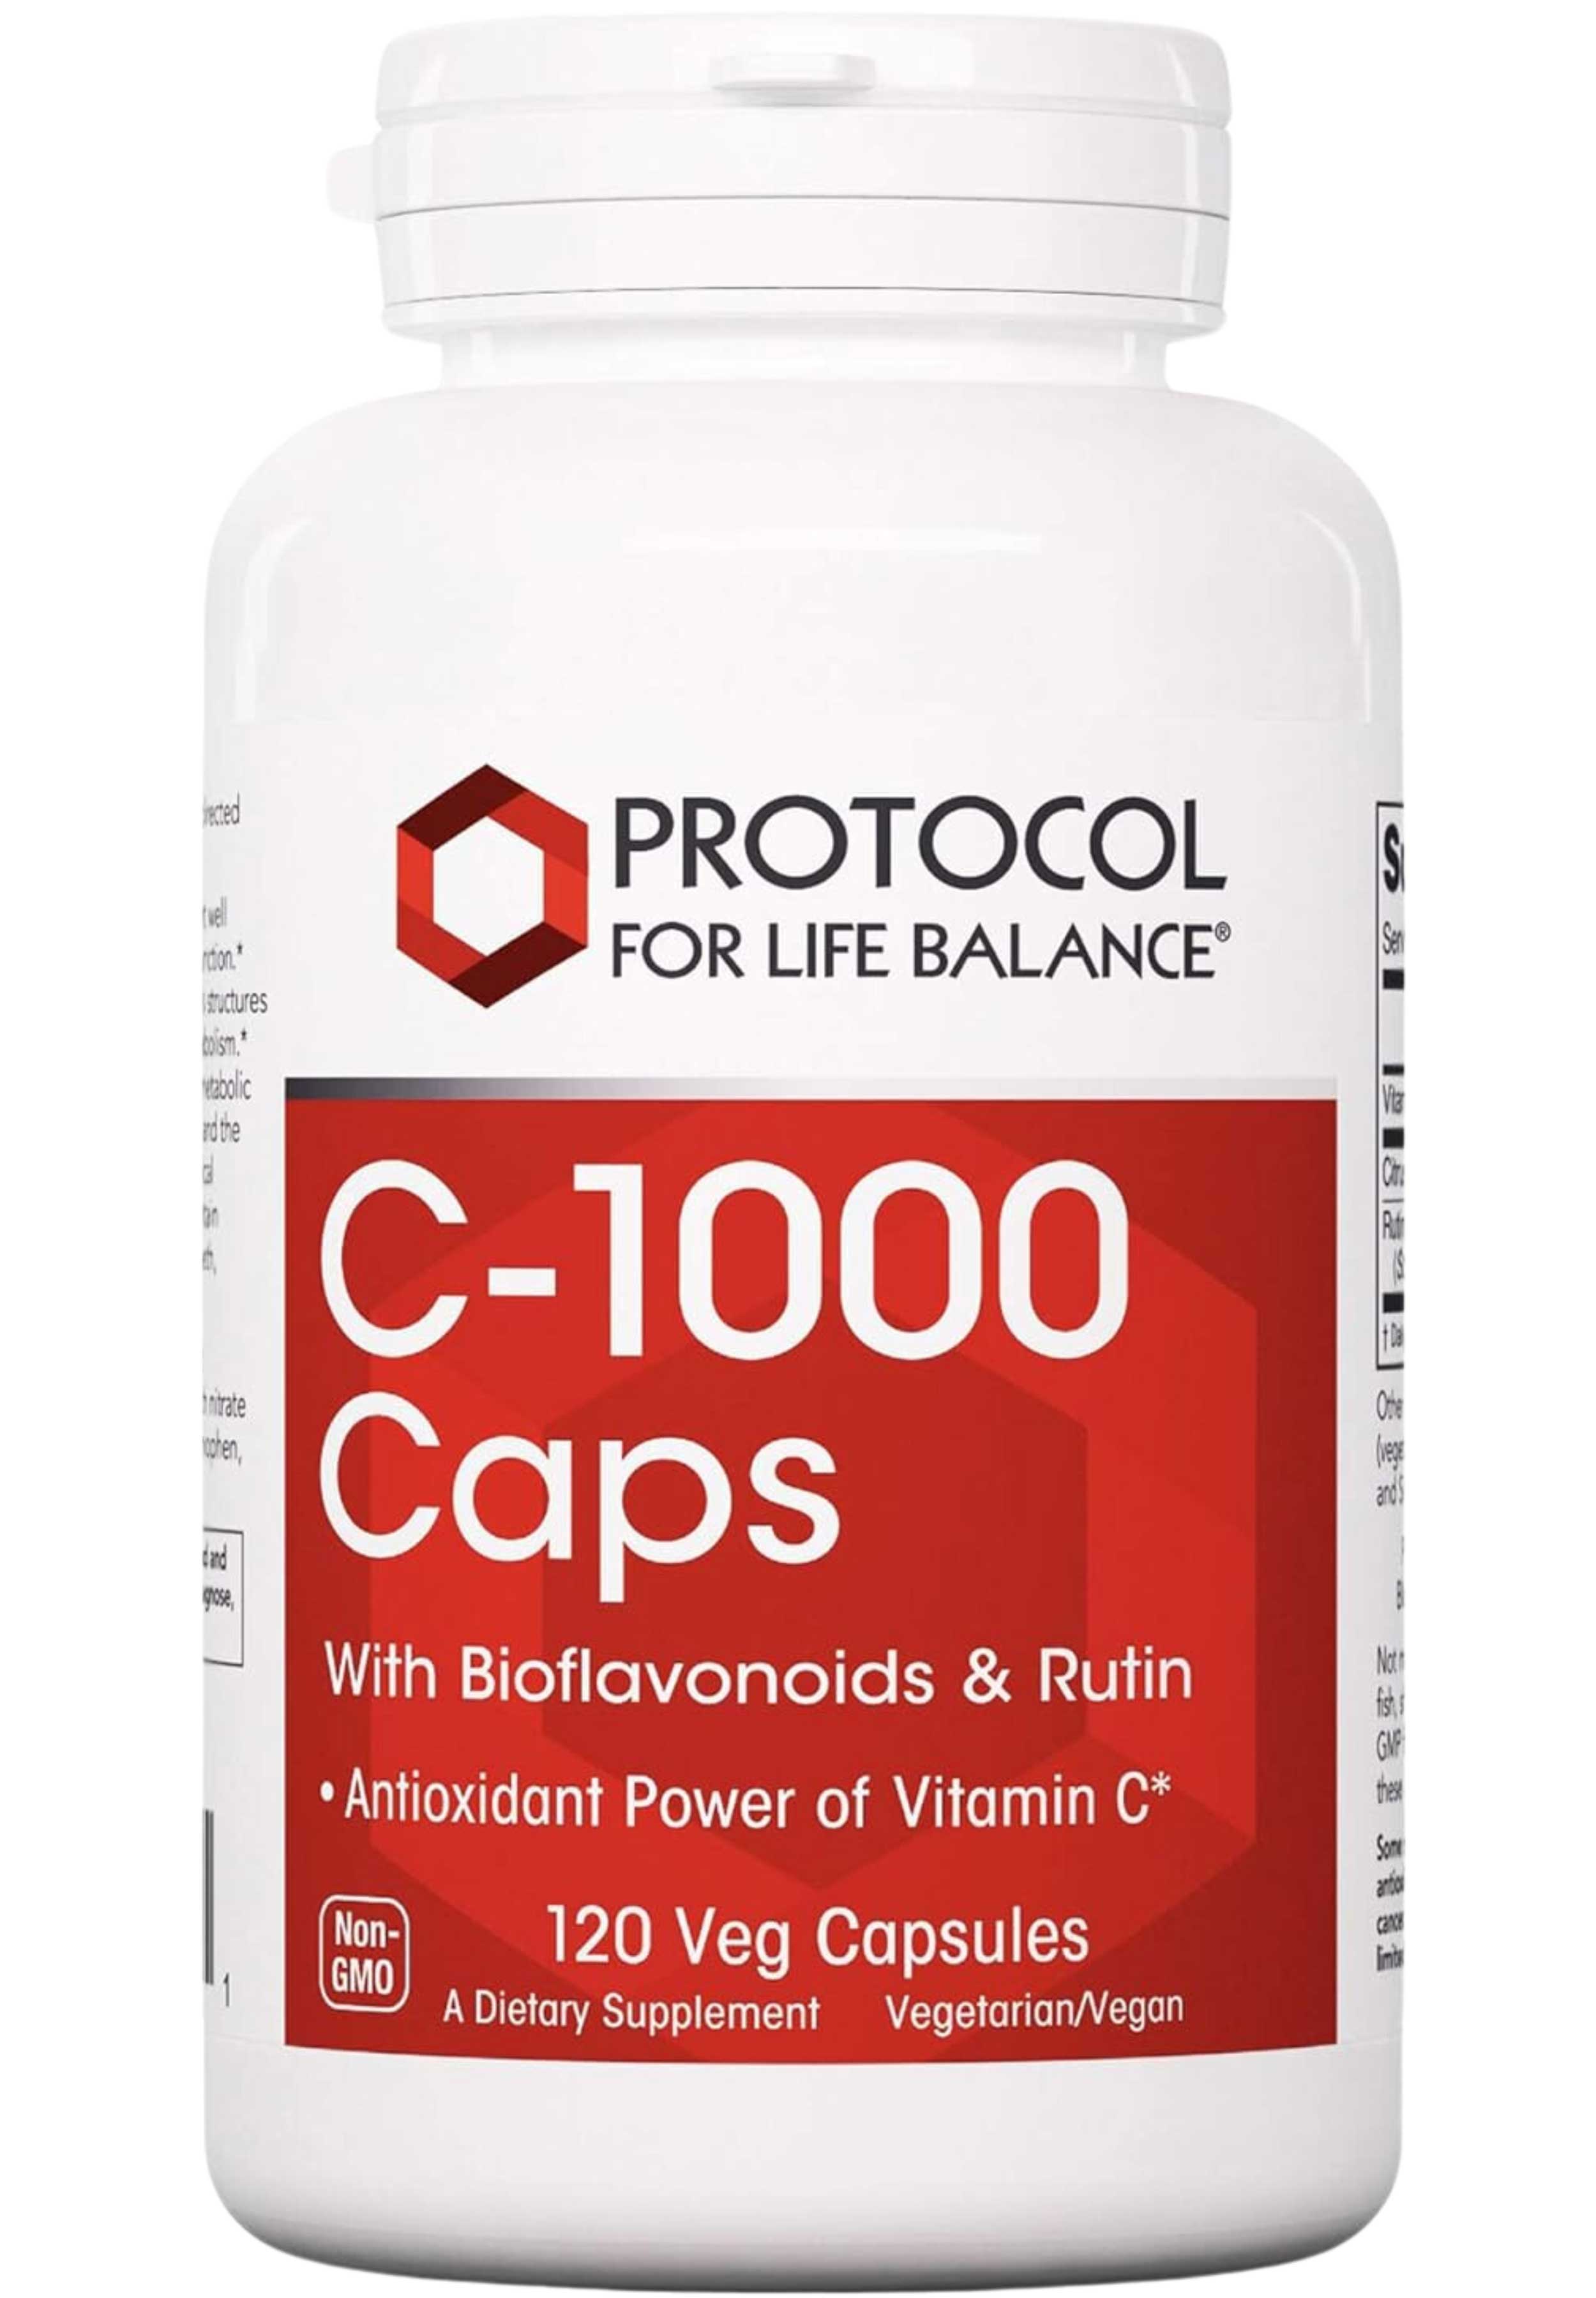 Protocol for Life Balance C-1000 Caps